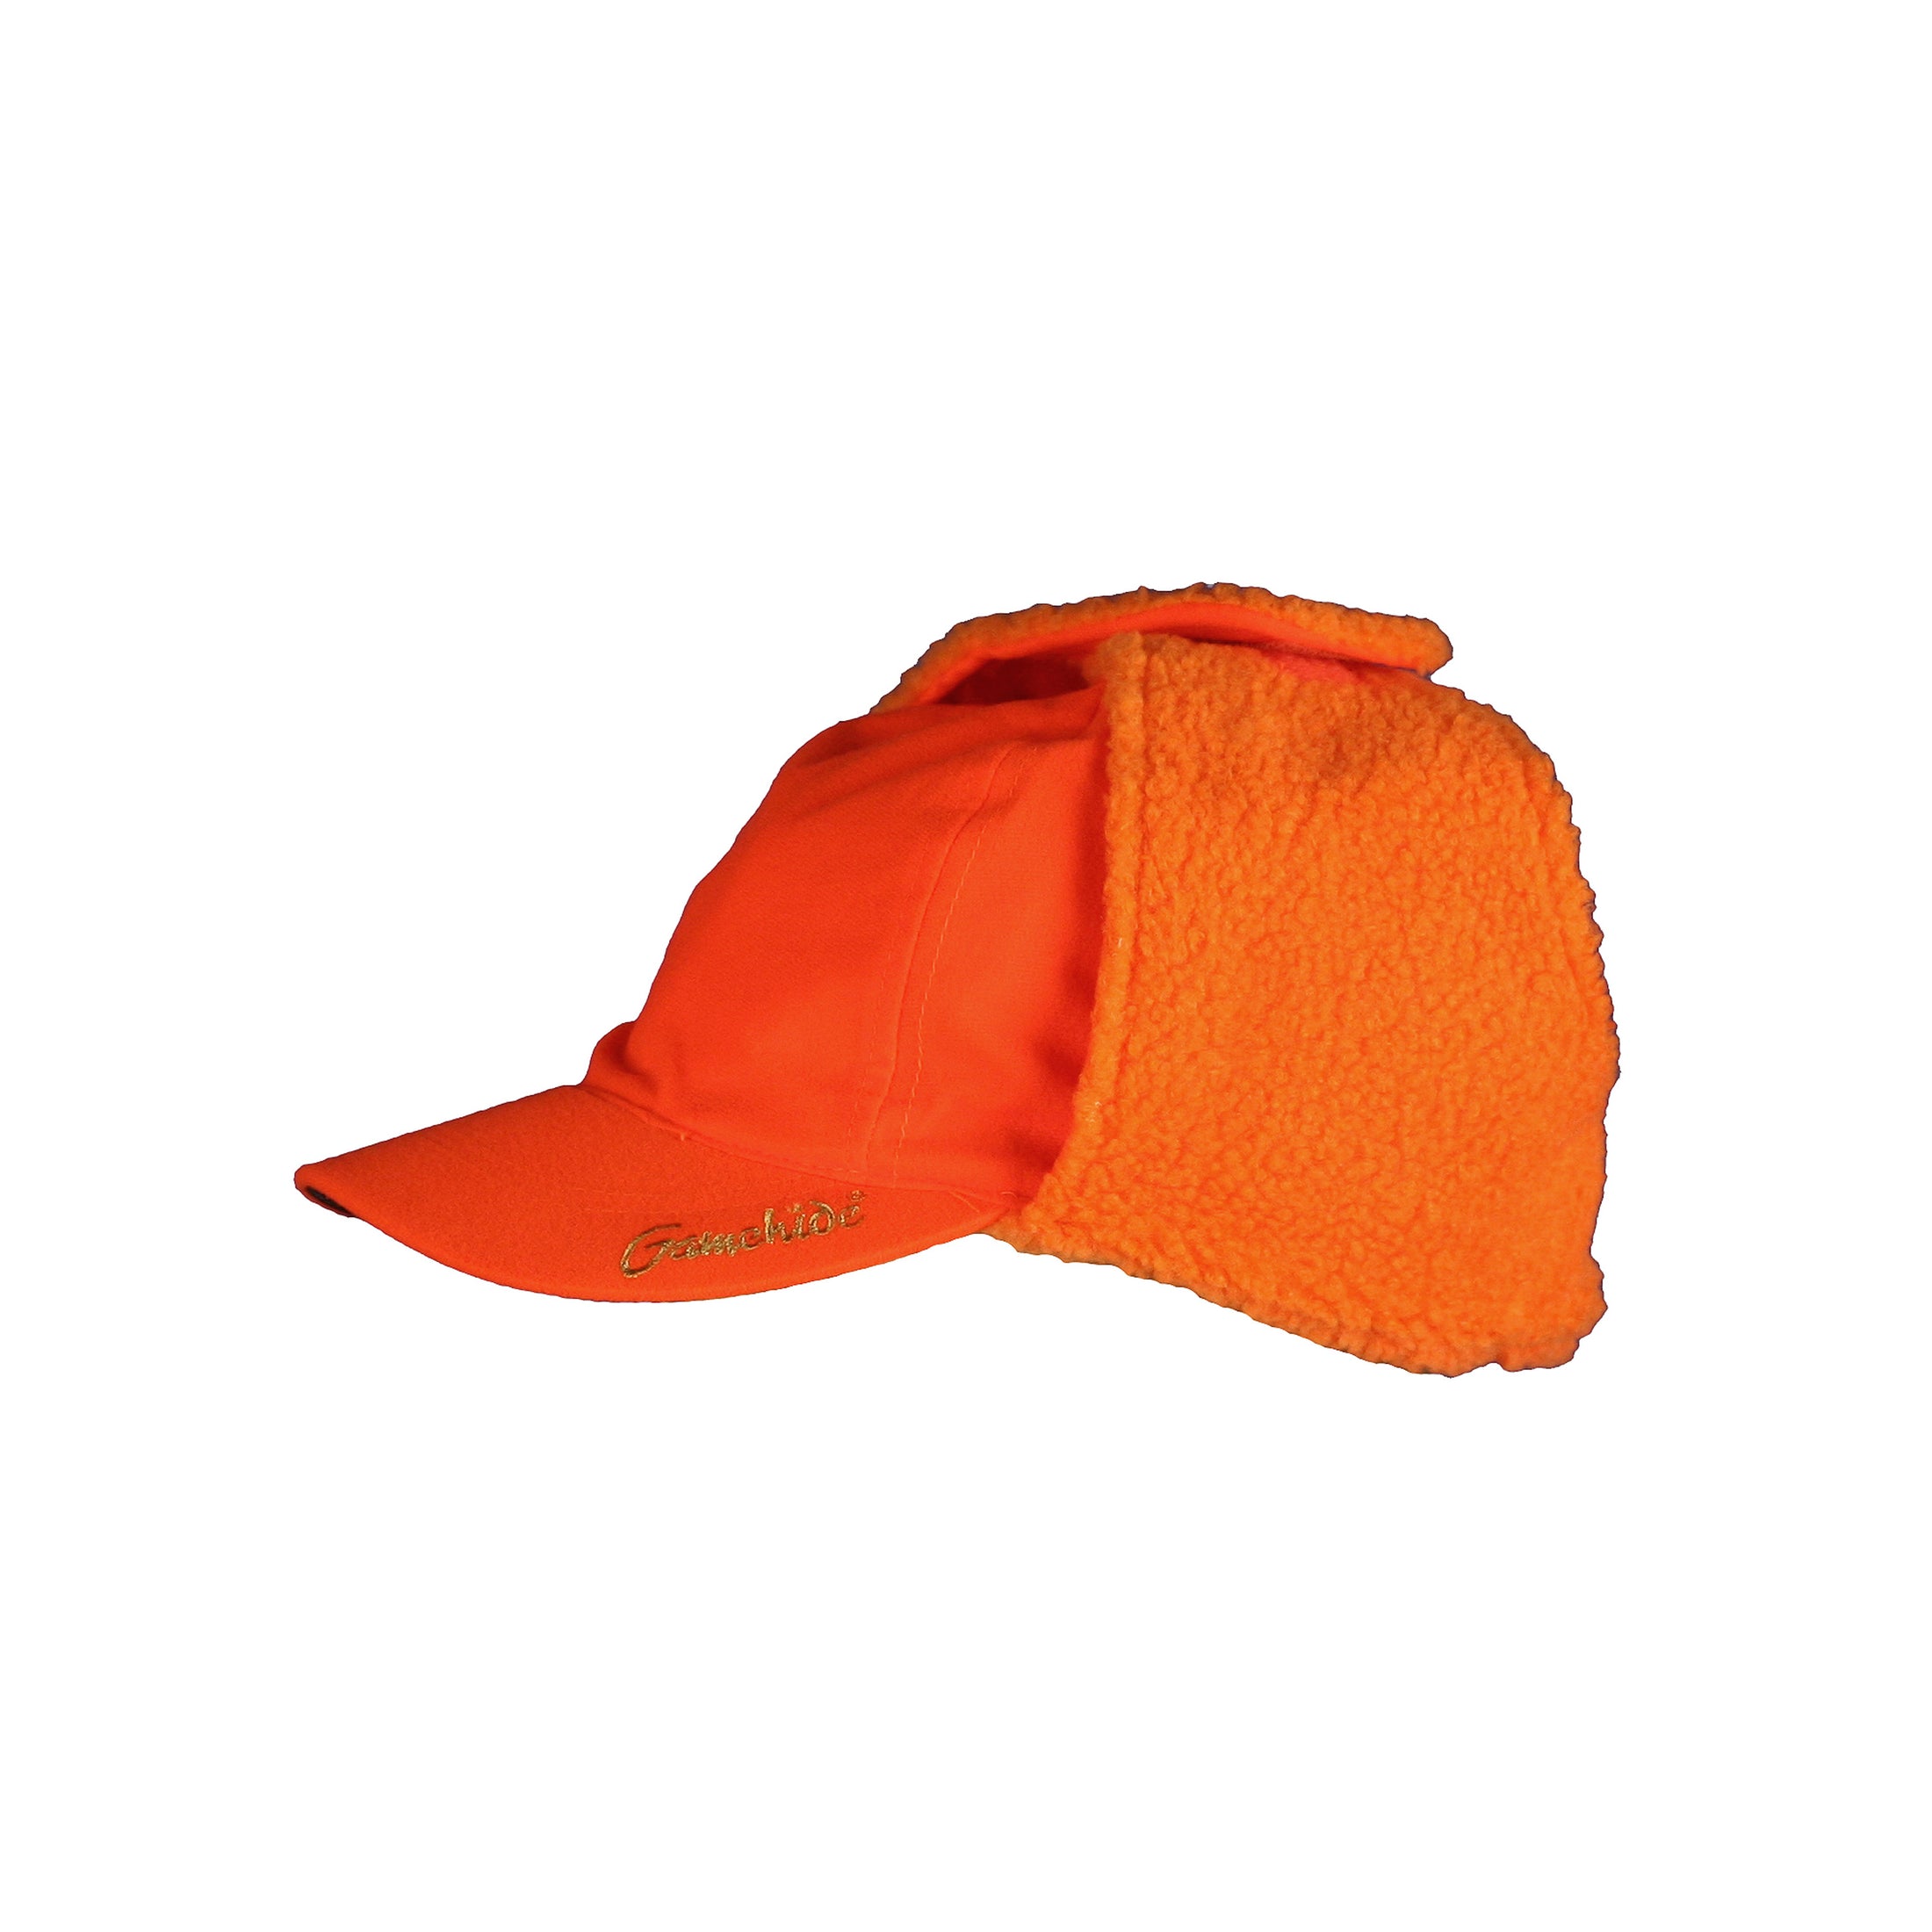 gamehide trophy hat (blaze orange)